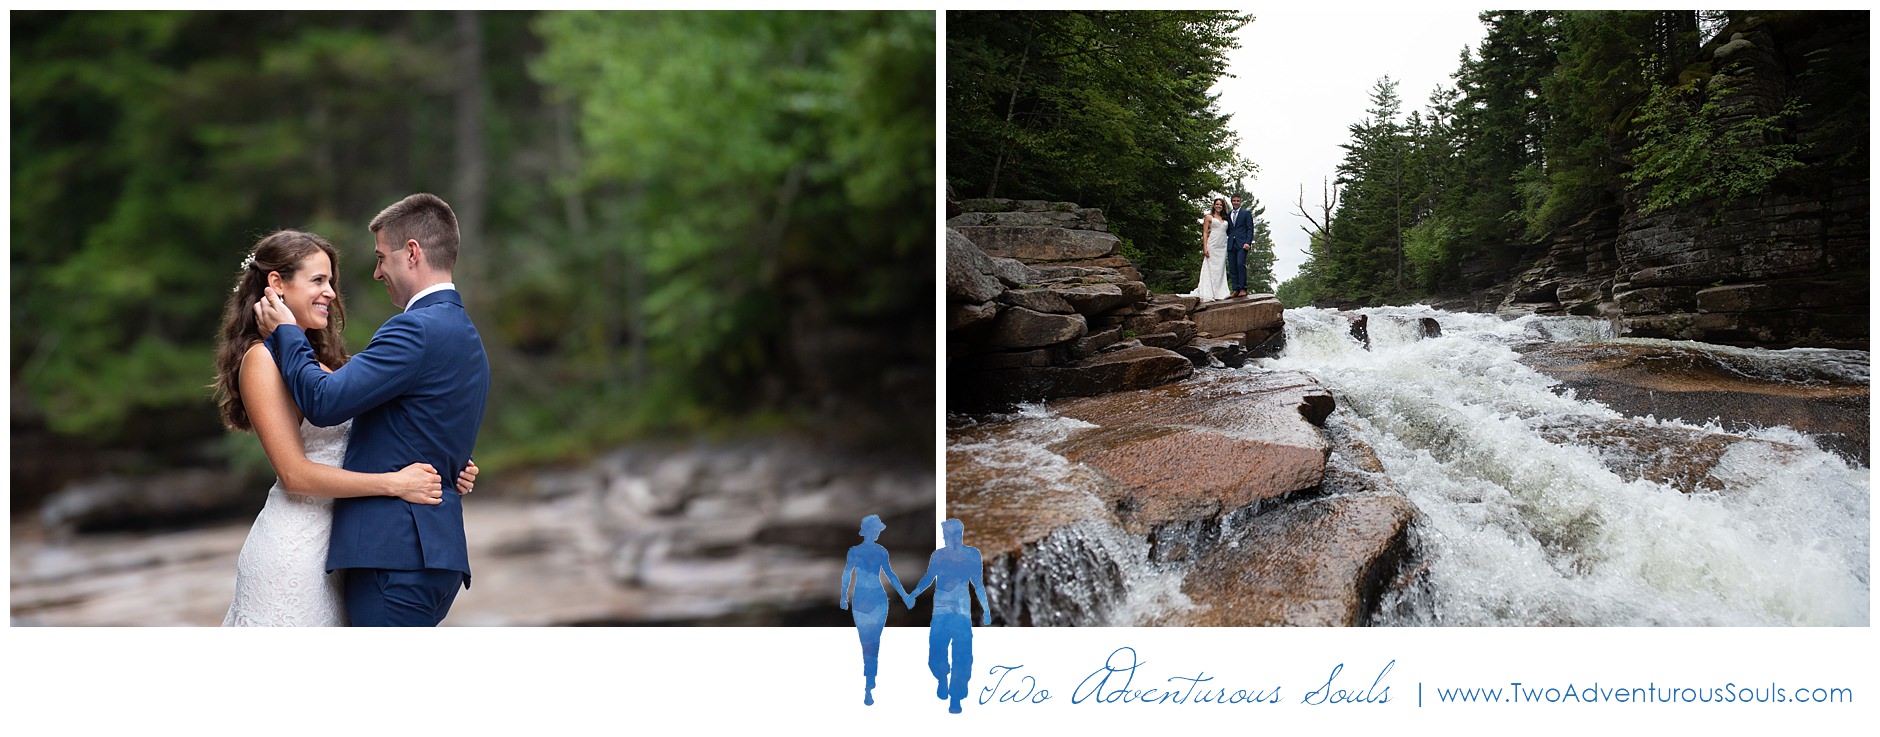 081818 - Chana & Rich - wedding SNEAKS-83_Adventure Wedding, Destination Wedding Photographers.jpg